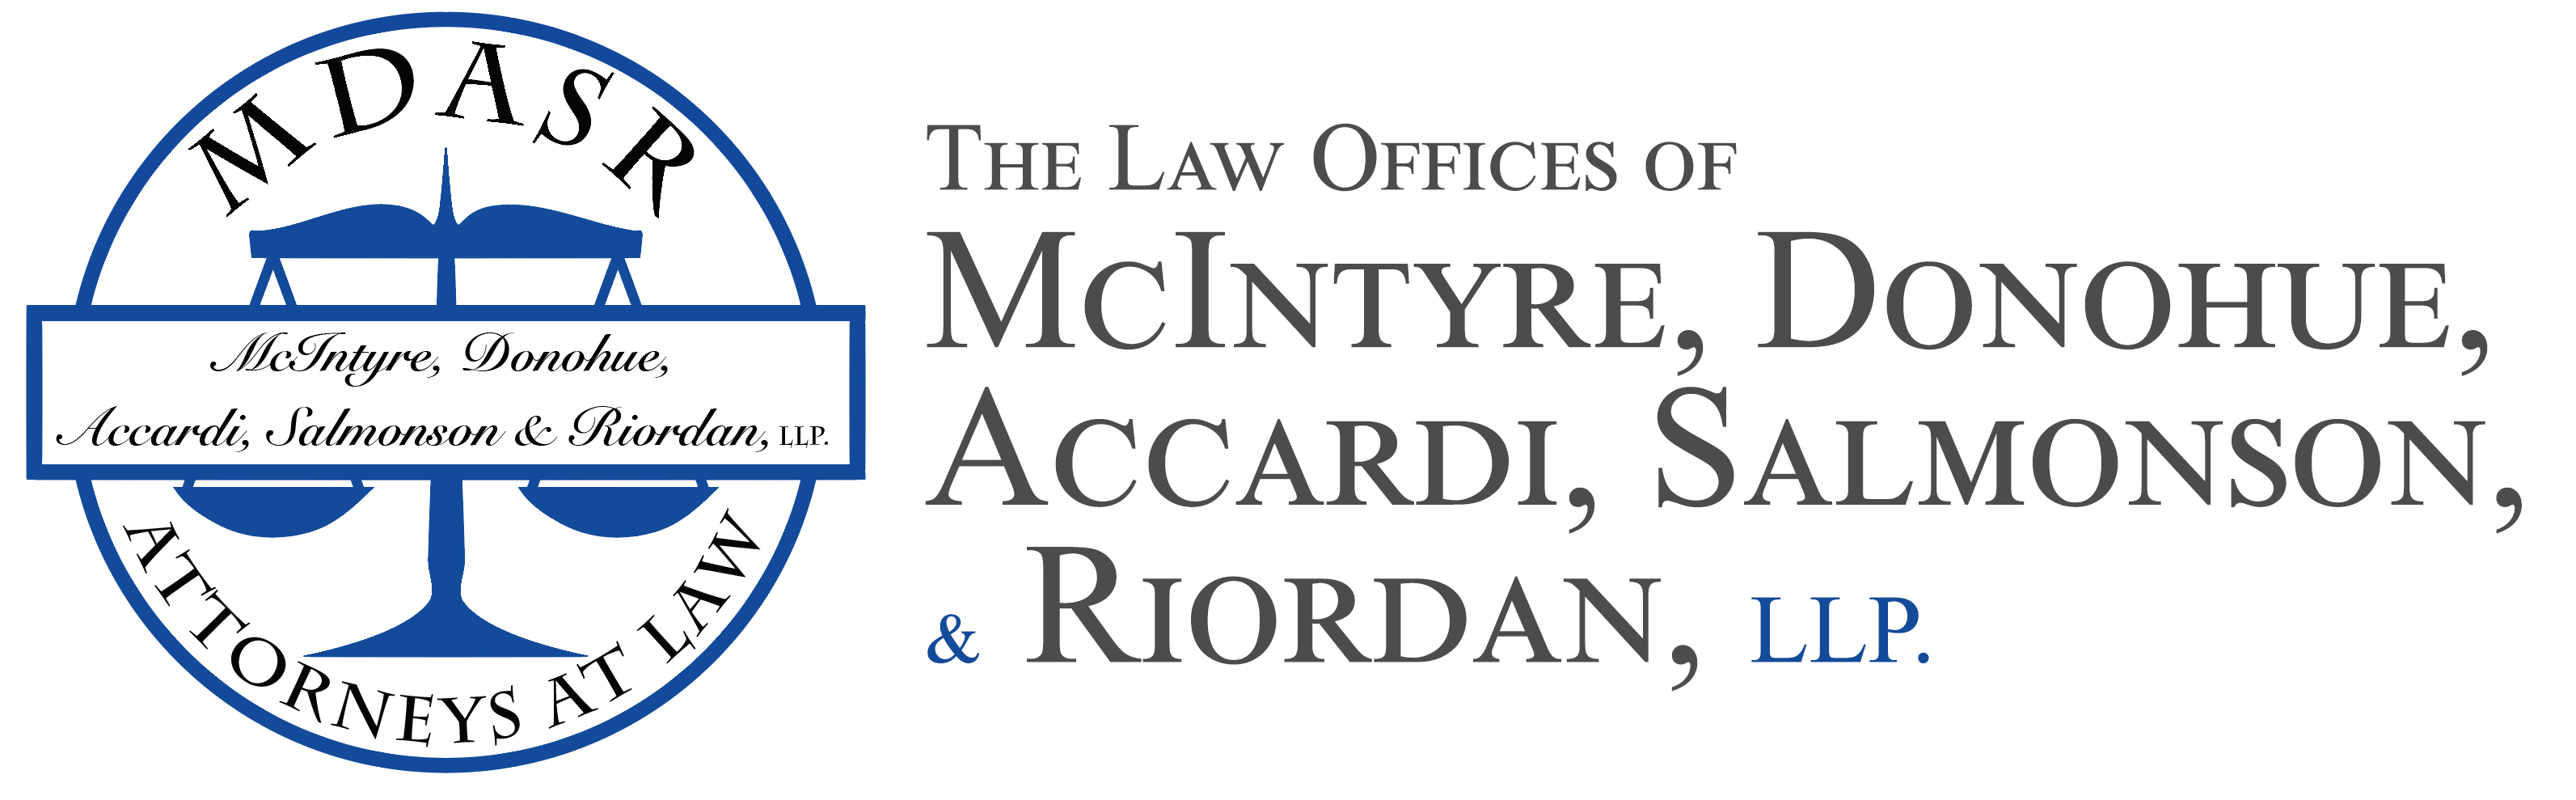 McIntyre, Donohue, Accardi, Salmonson, and Riordan, LLP logo